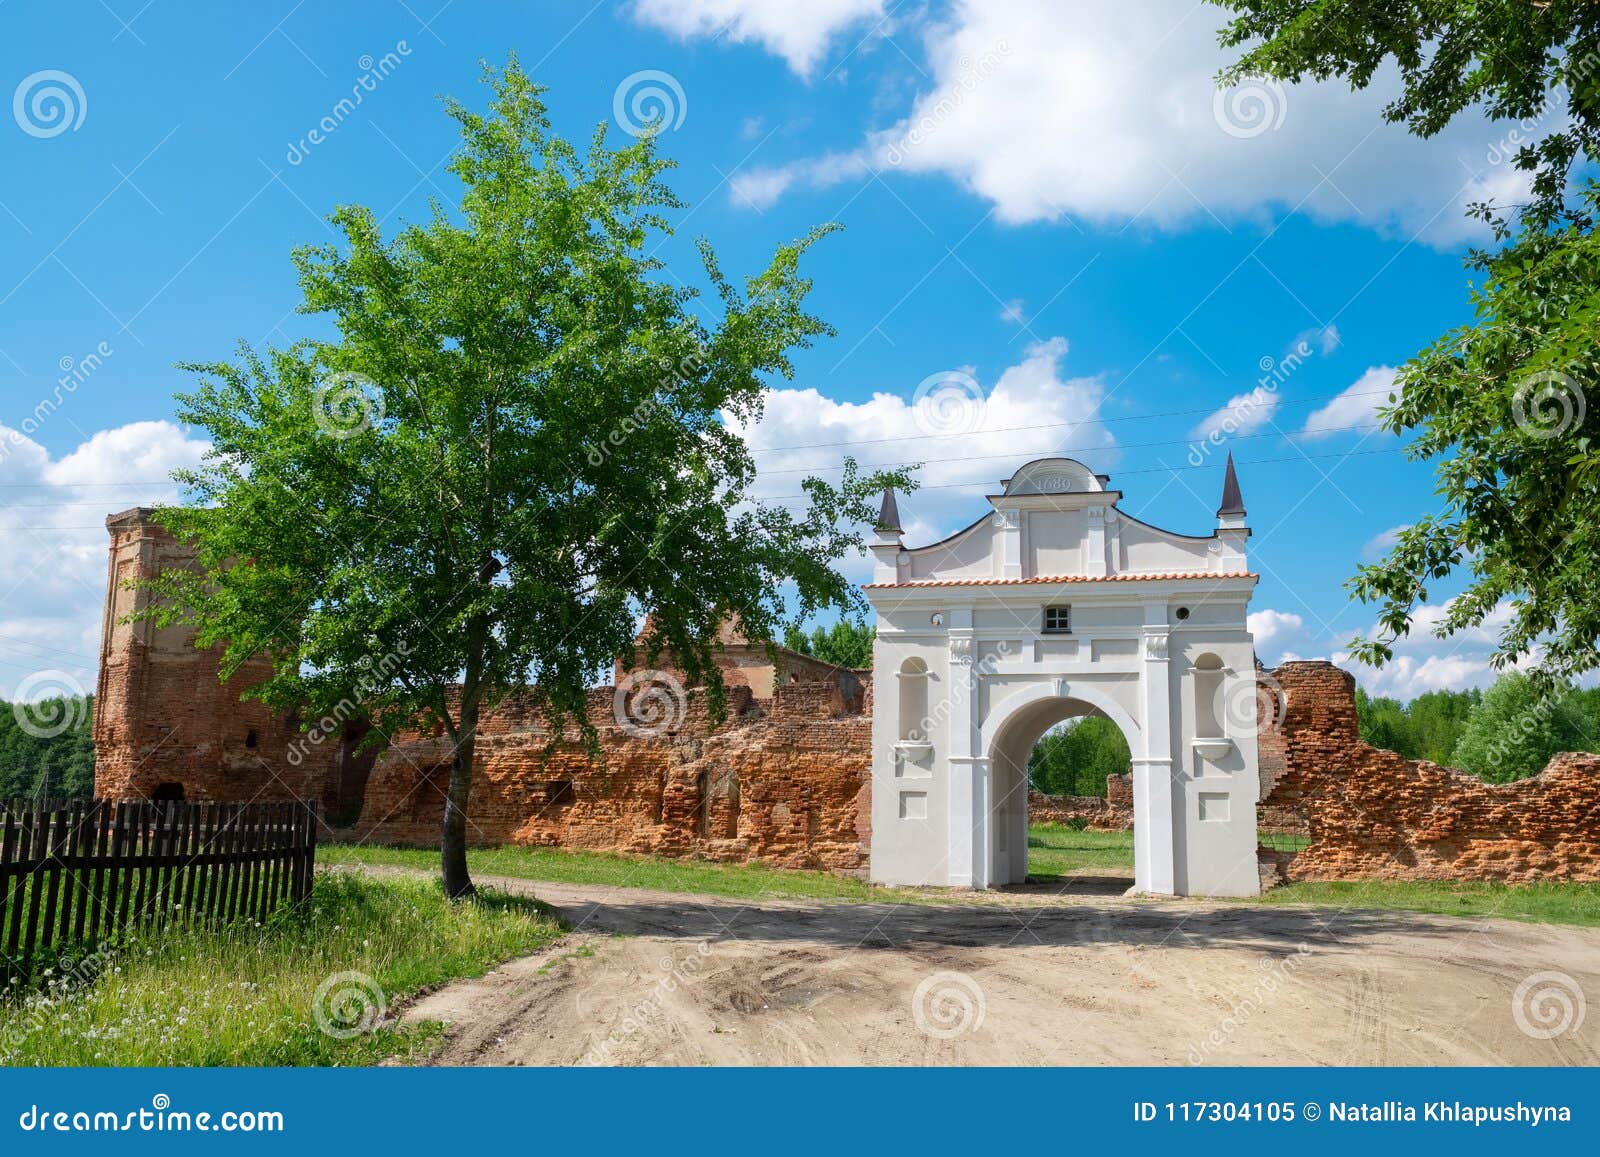 gate of ruins of the carthusian monastery in beryoza city, brest region, belarus.